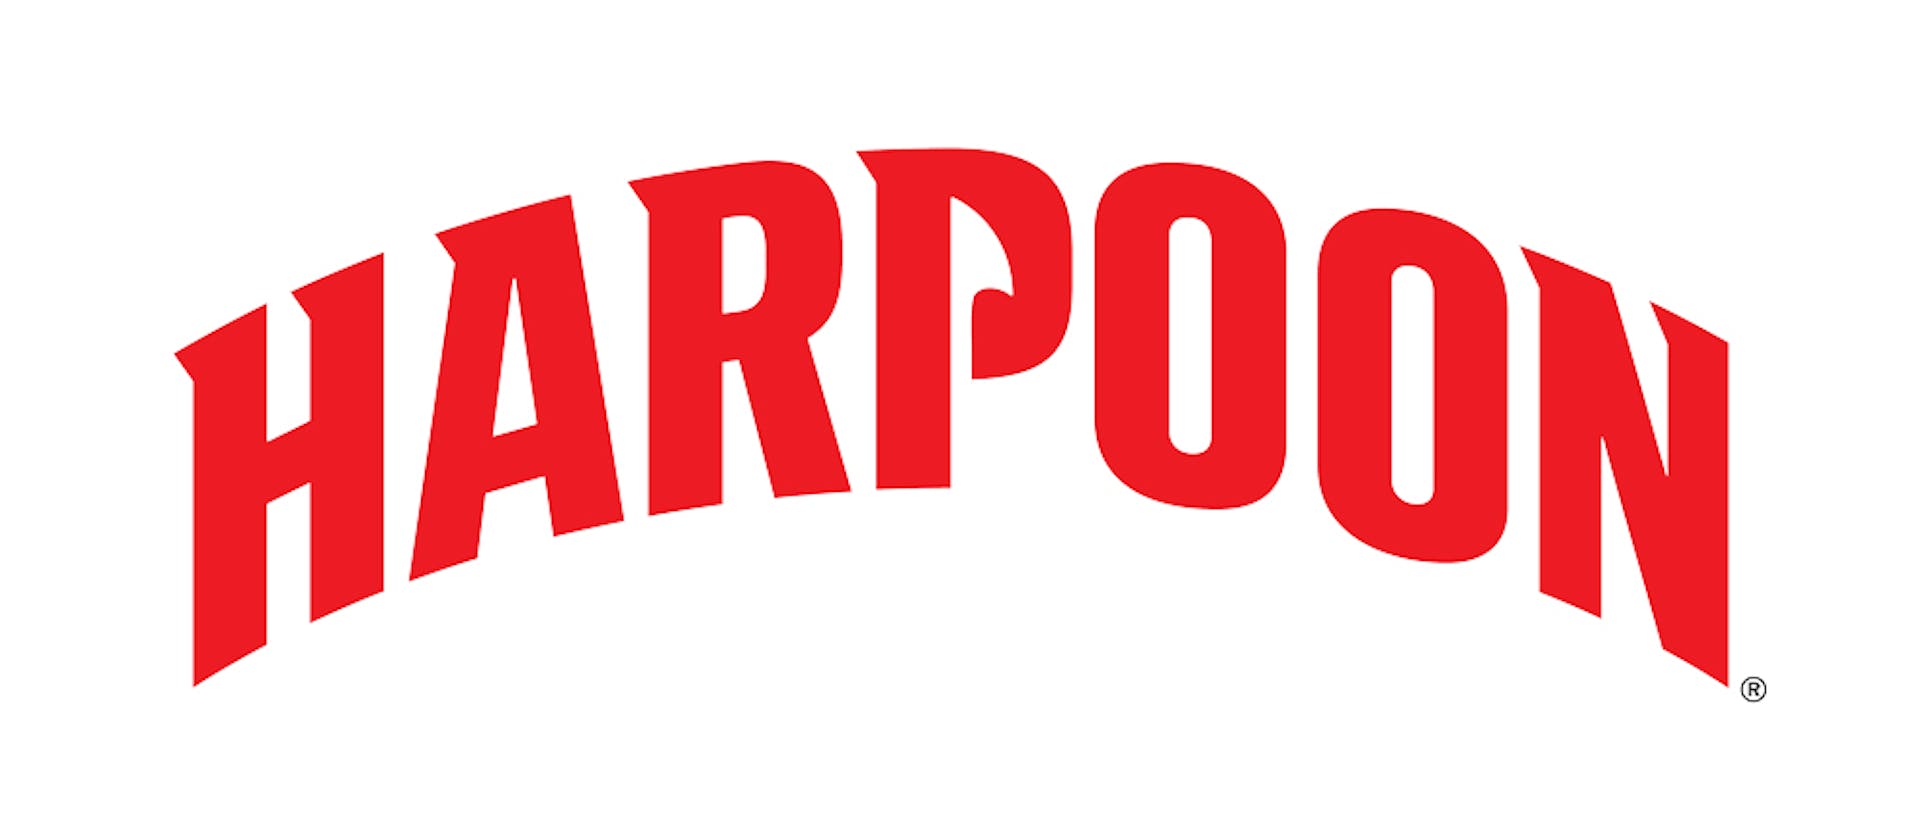 Harpoon-Logos_Red-color